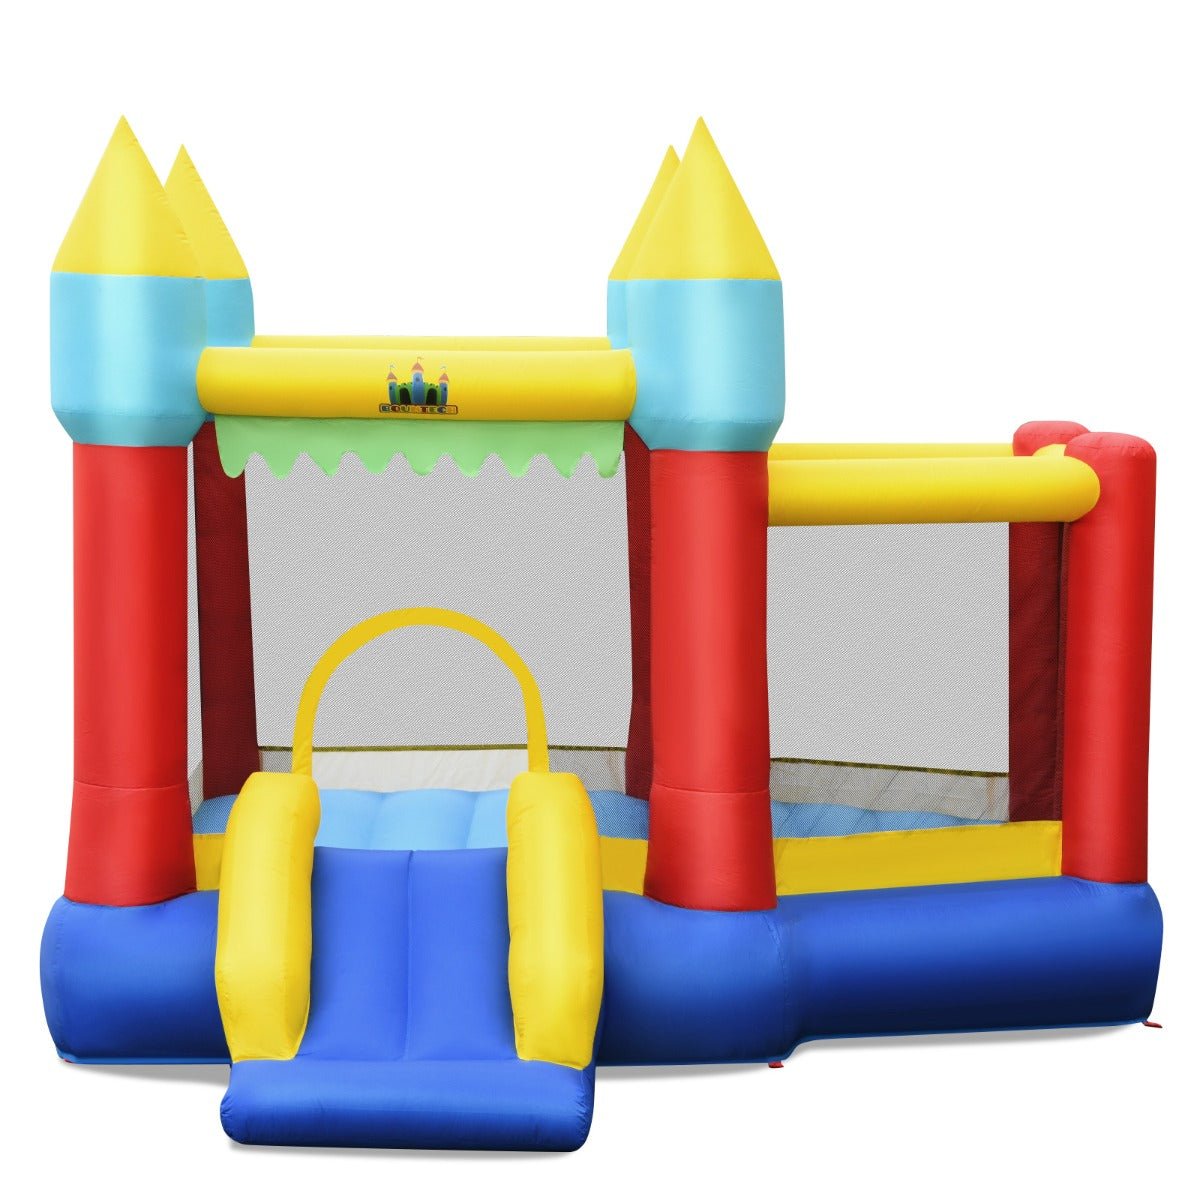 Bounce House with Slide, Basketball & Ocean Balls - Active Adventure for Children